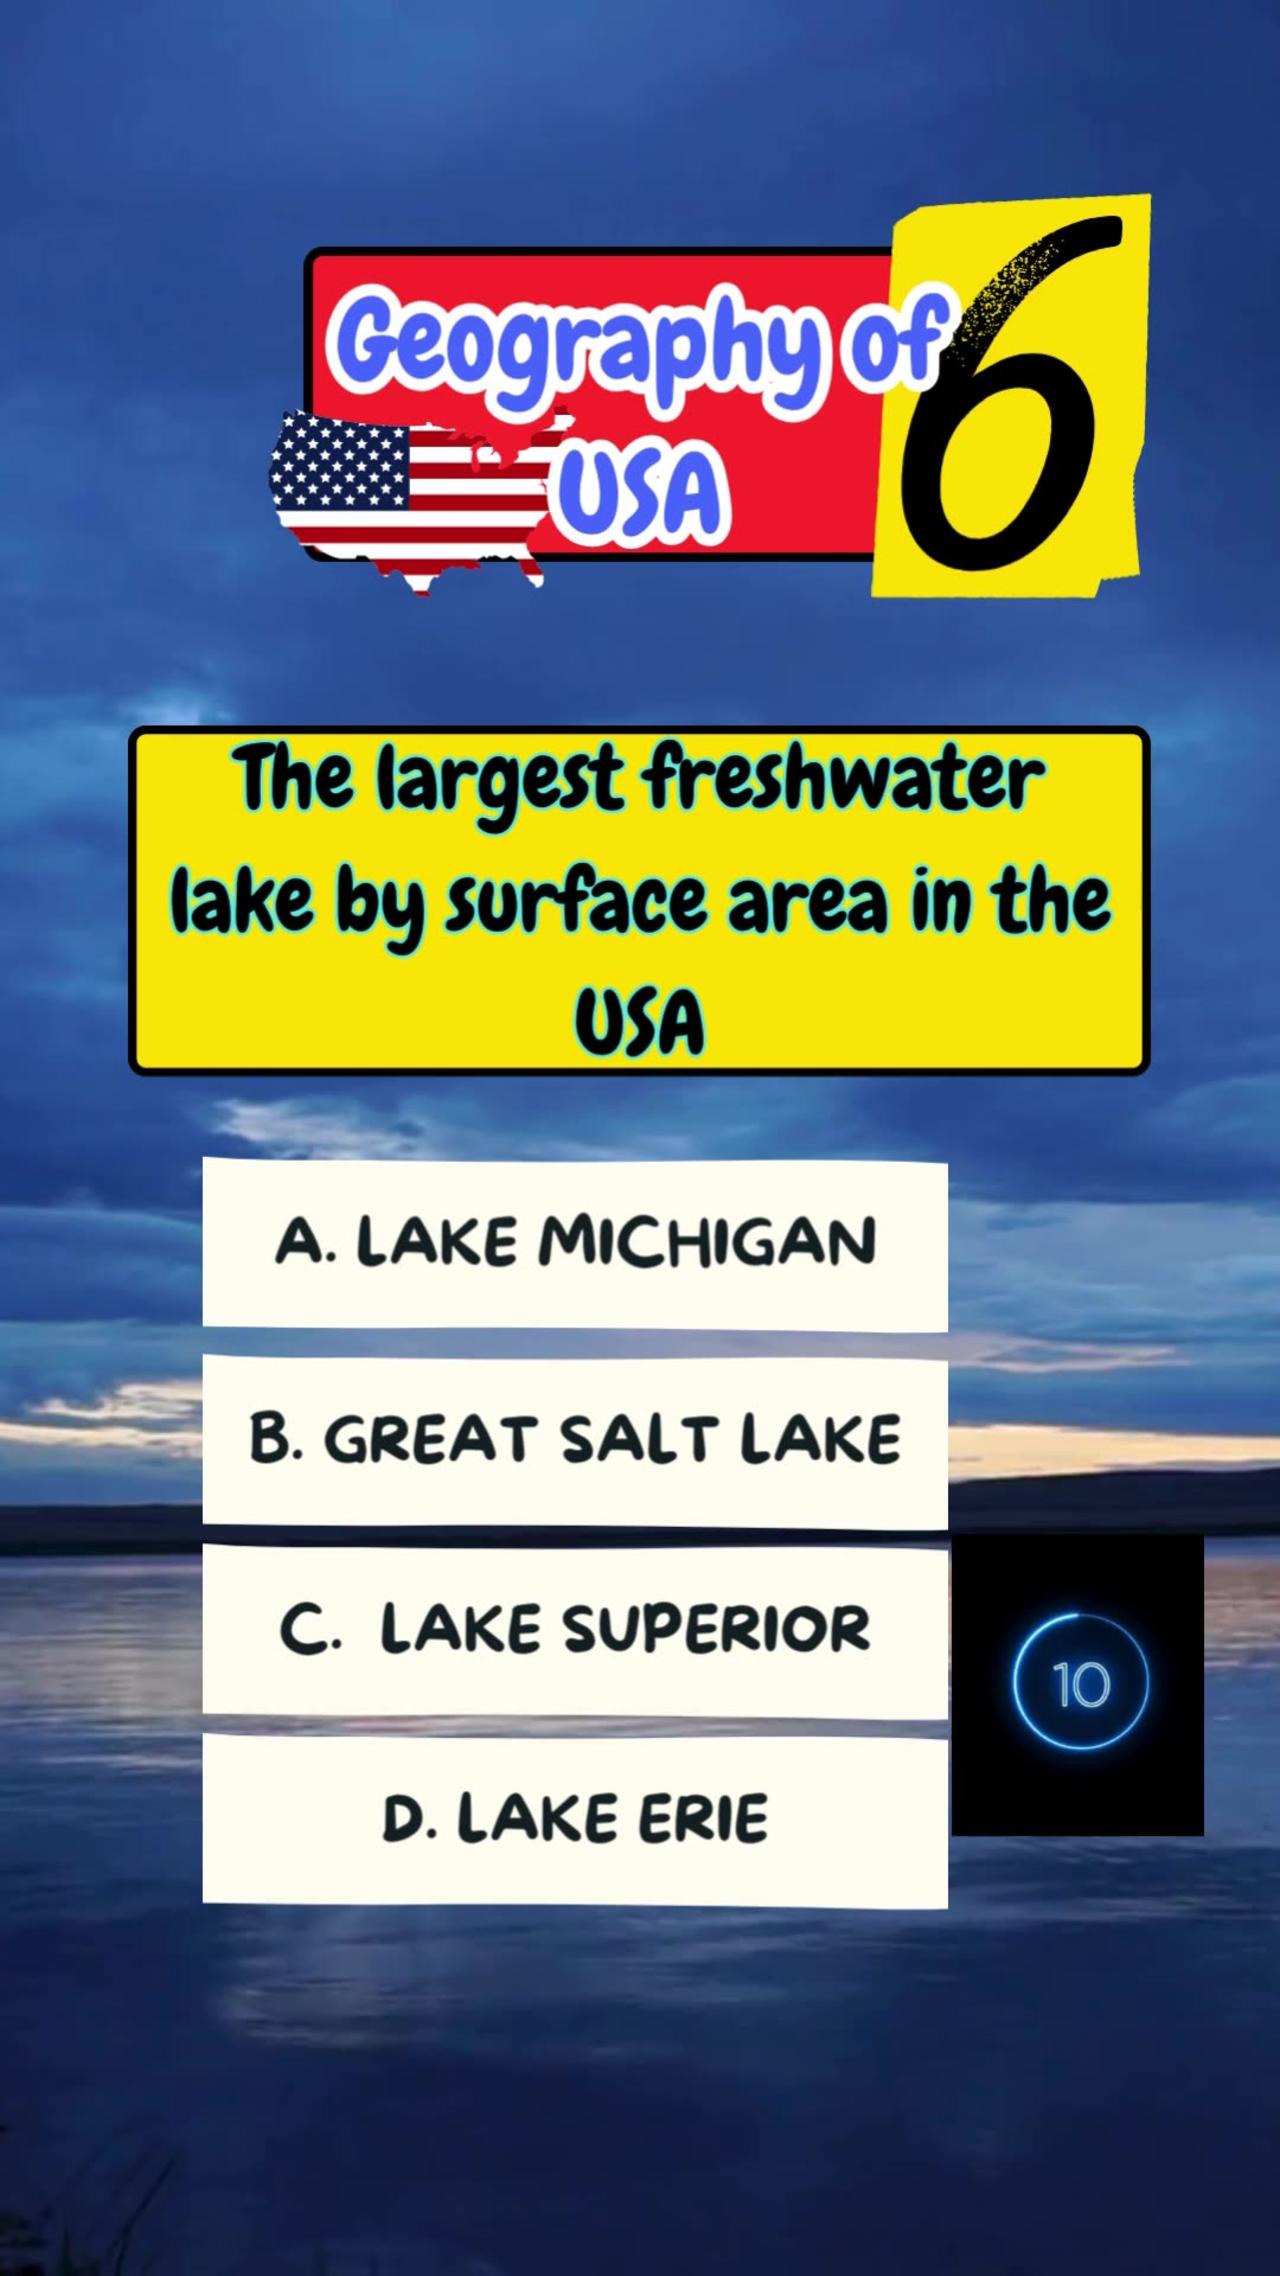 Trivia Challenge. Geography of USA 6